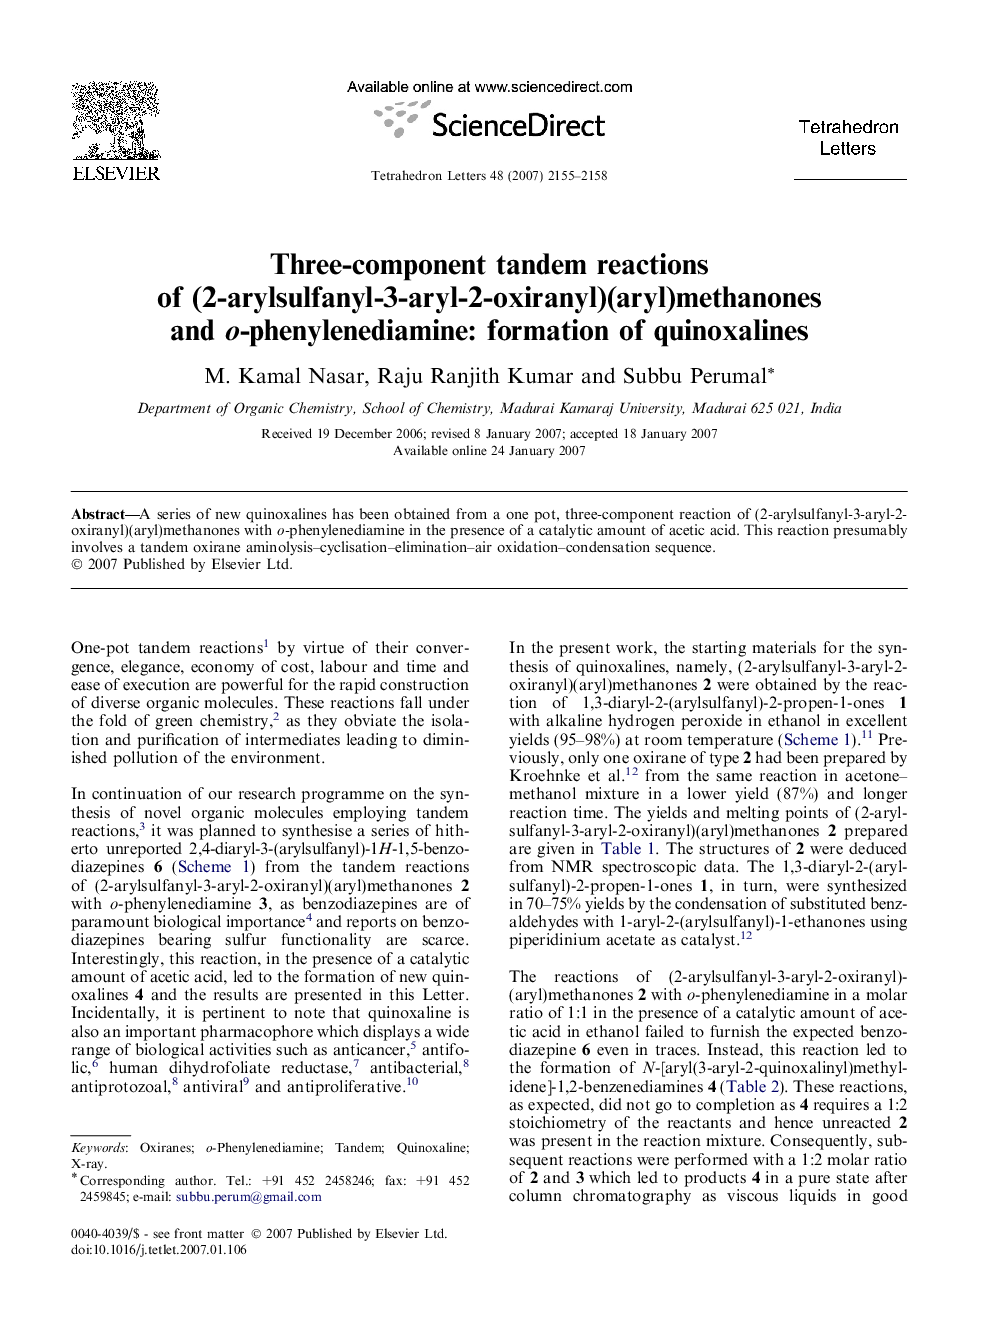 Three-component tandem reactions of (2-arylsulfanyl-3-aryl-2-oxiranyl)(aryl)methanones and o-phenylenediamine: formation of quinoxalines